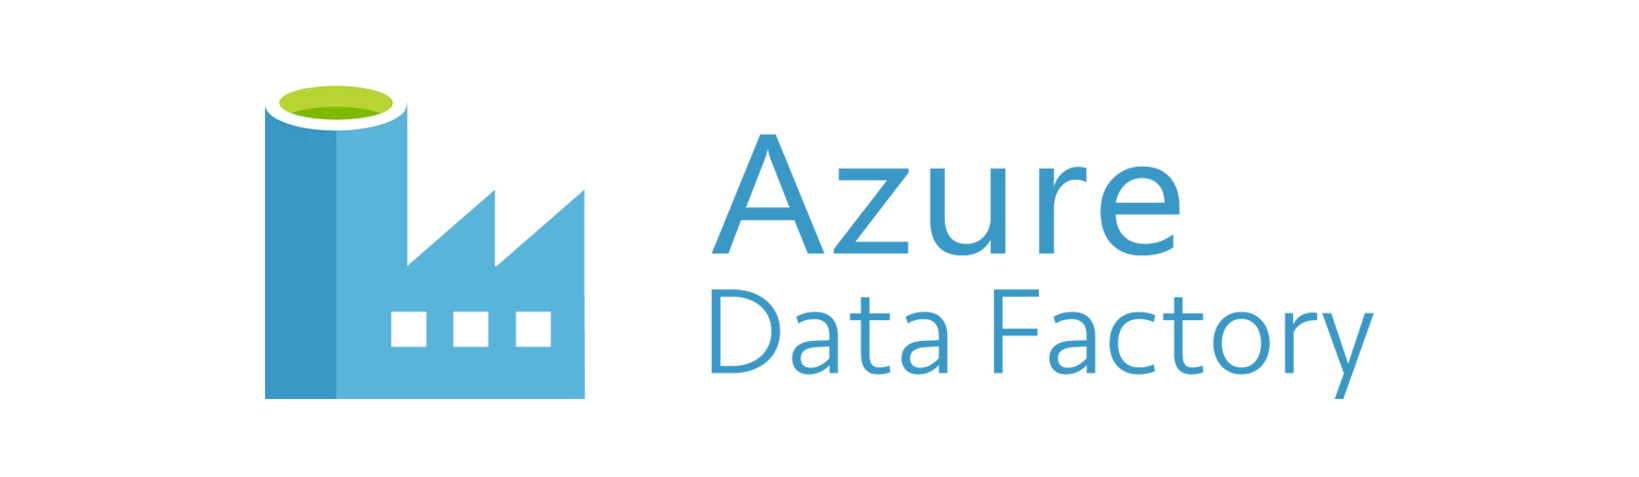 Azure Data Factory ロゴ画像